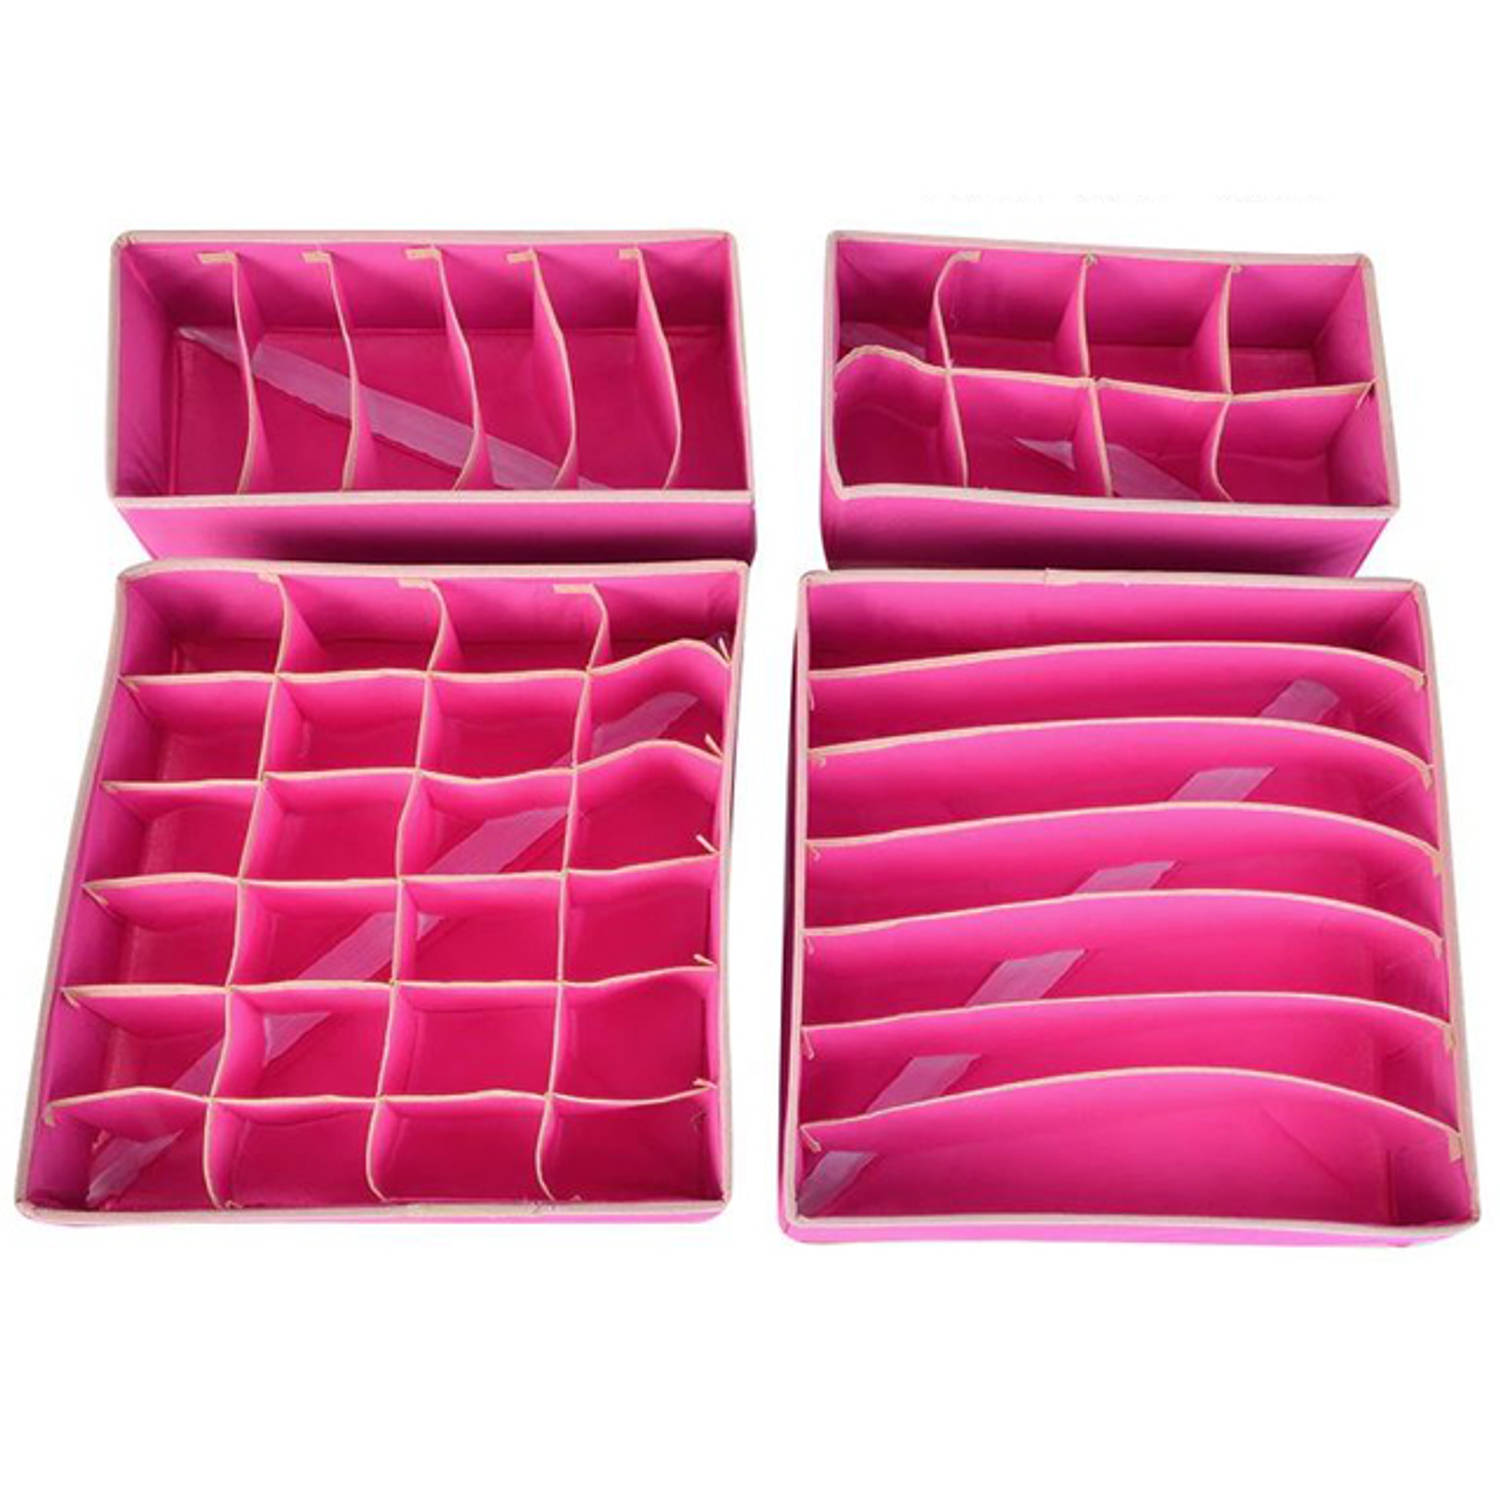 Kleding organizerset – Roze - Opbergboxen kleding | Blokker